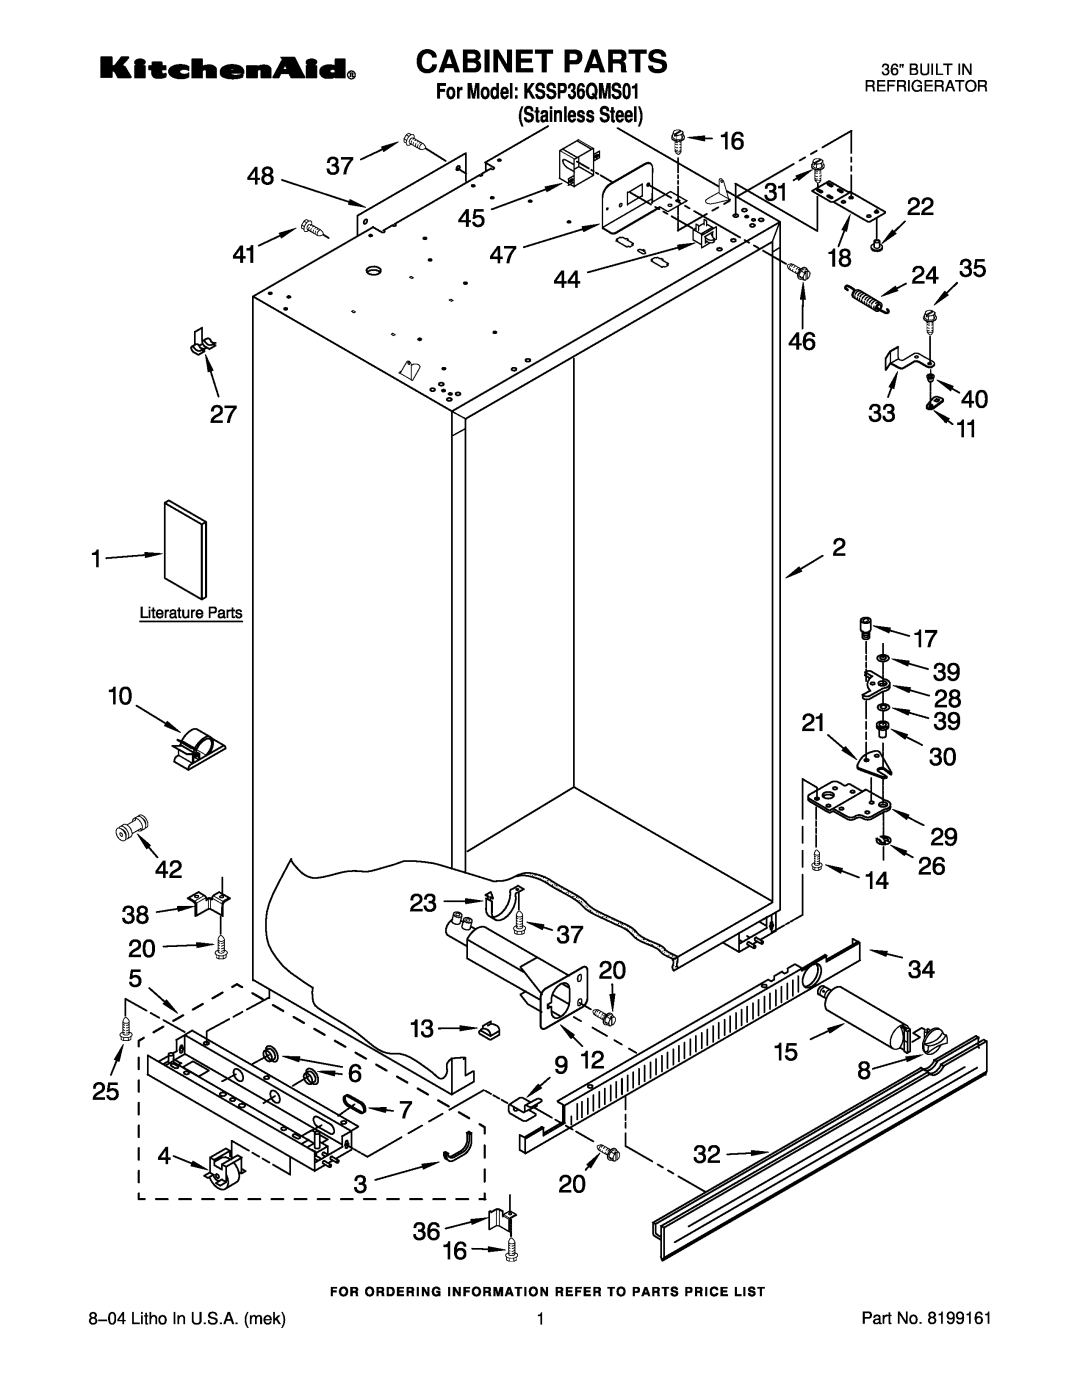 KitchenAid manual Cabinet Parts, 8−04 Litho In U.S.A. mek, For Model KSSP36QMS01 Stainless Steel, Built In Refrigerator 